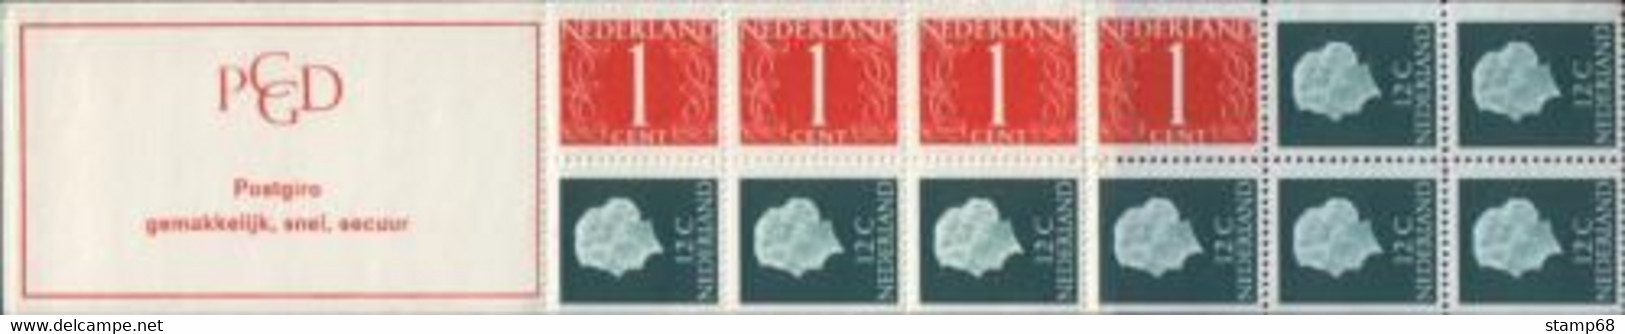 Nederland NVPH PB8a Postzegelboekje 1969 MNH Postfris - Carnets Et Roulettes